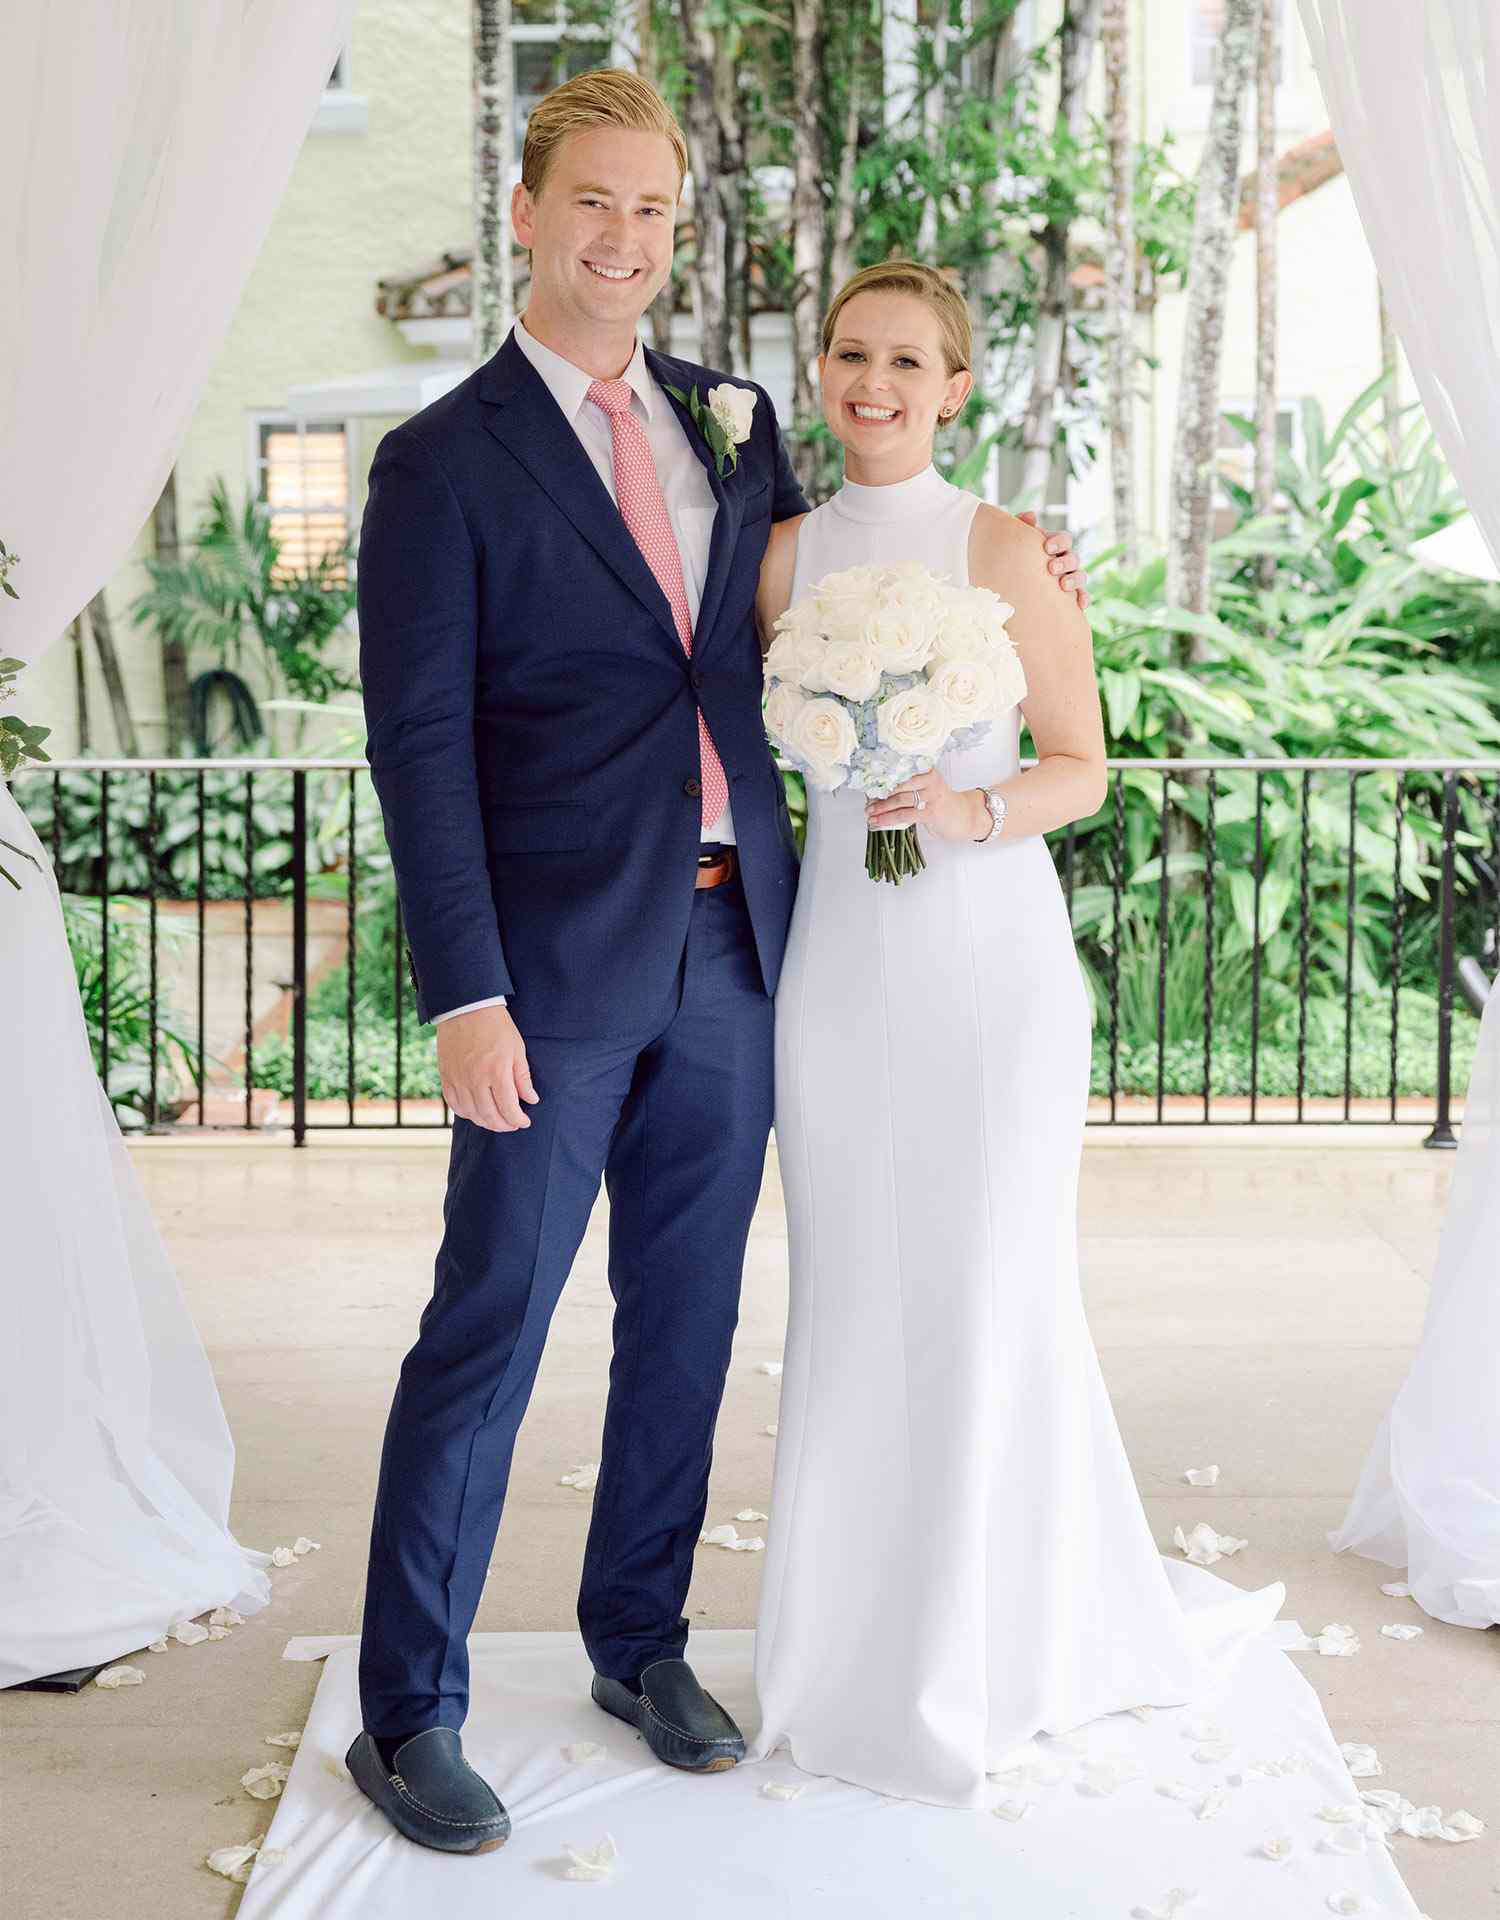 Fox News' Peter Doocy Officiated Sister's Wedding